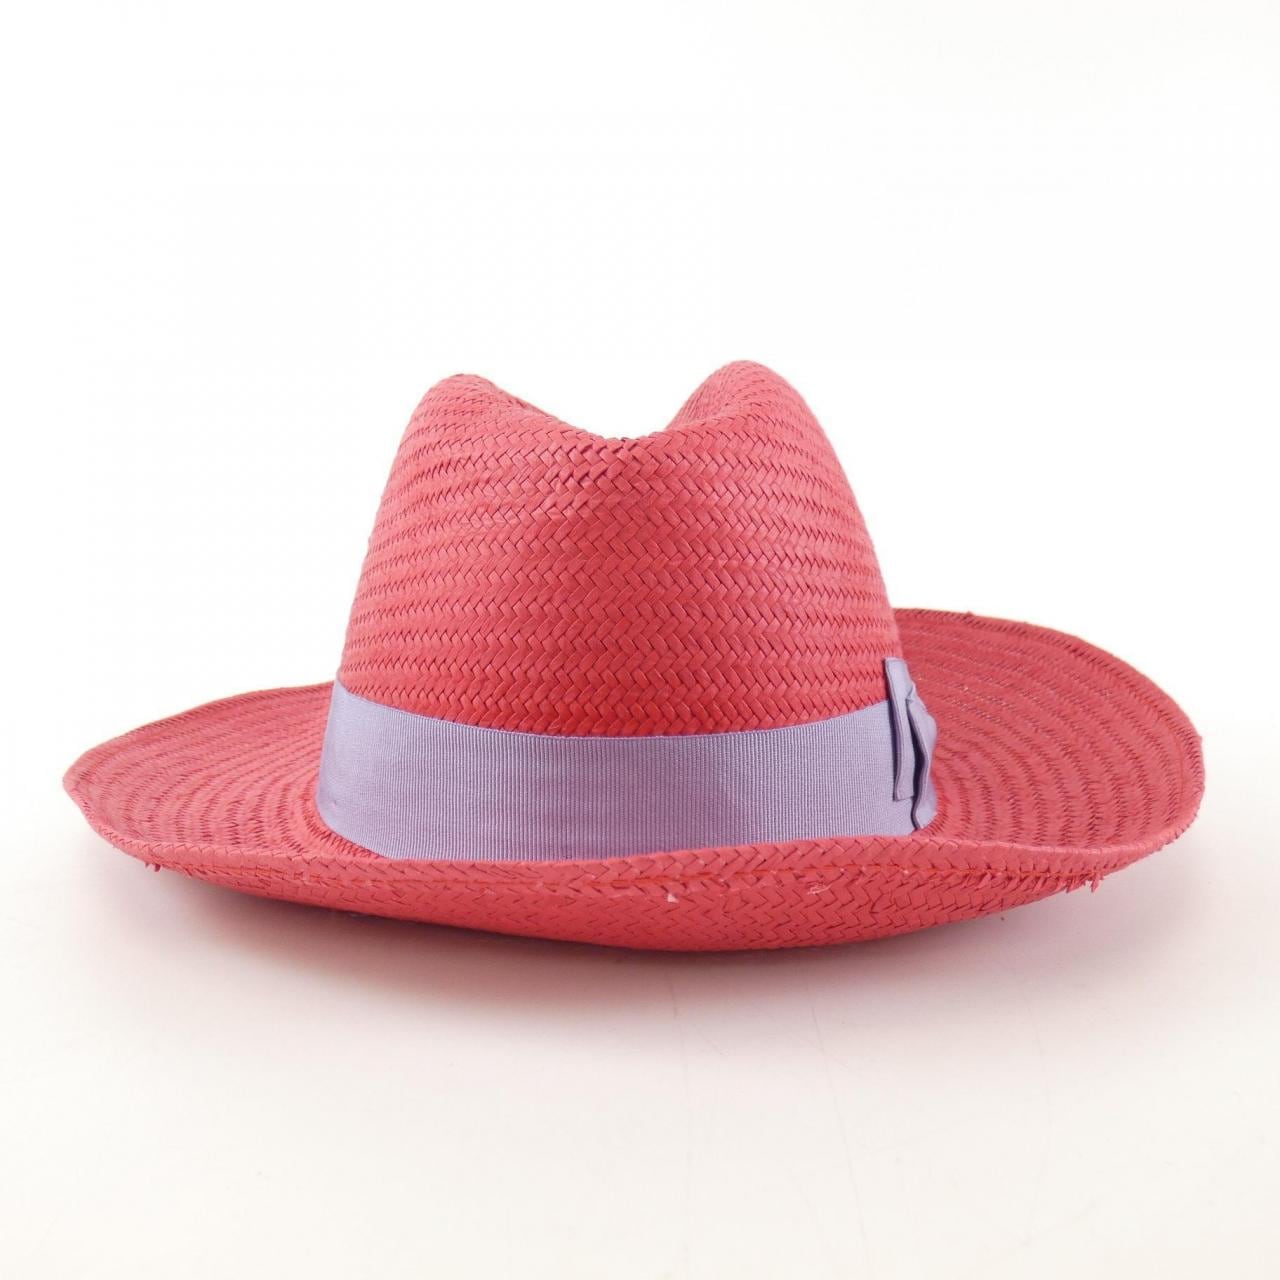 Borsalino BORSALINO hat